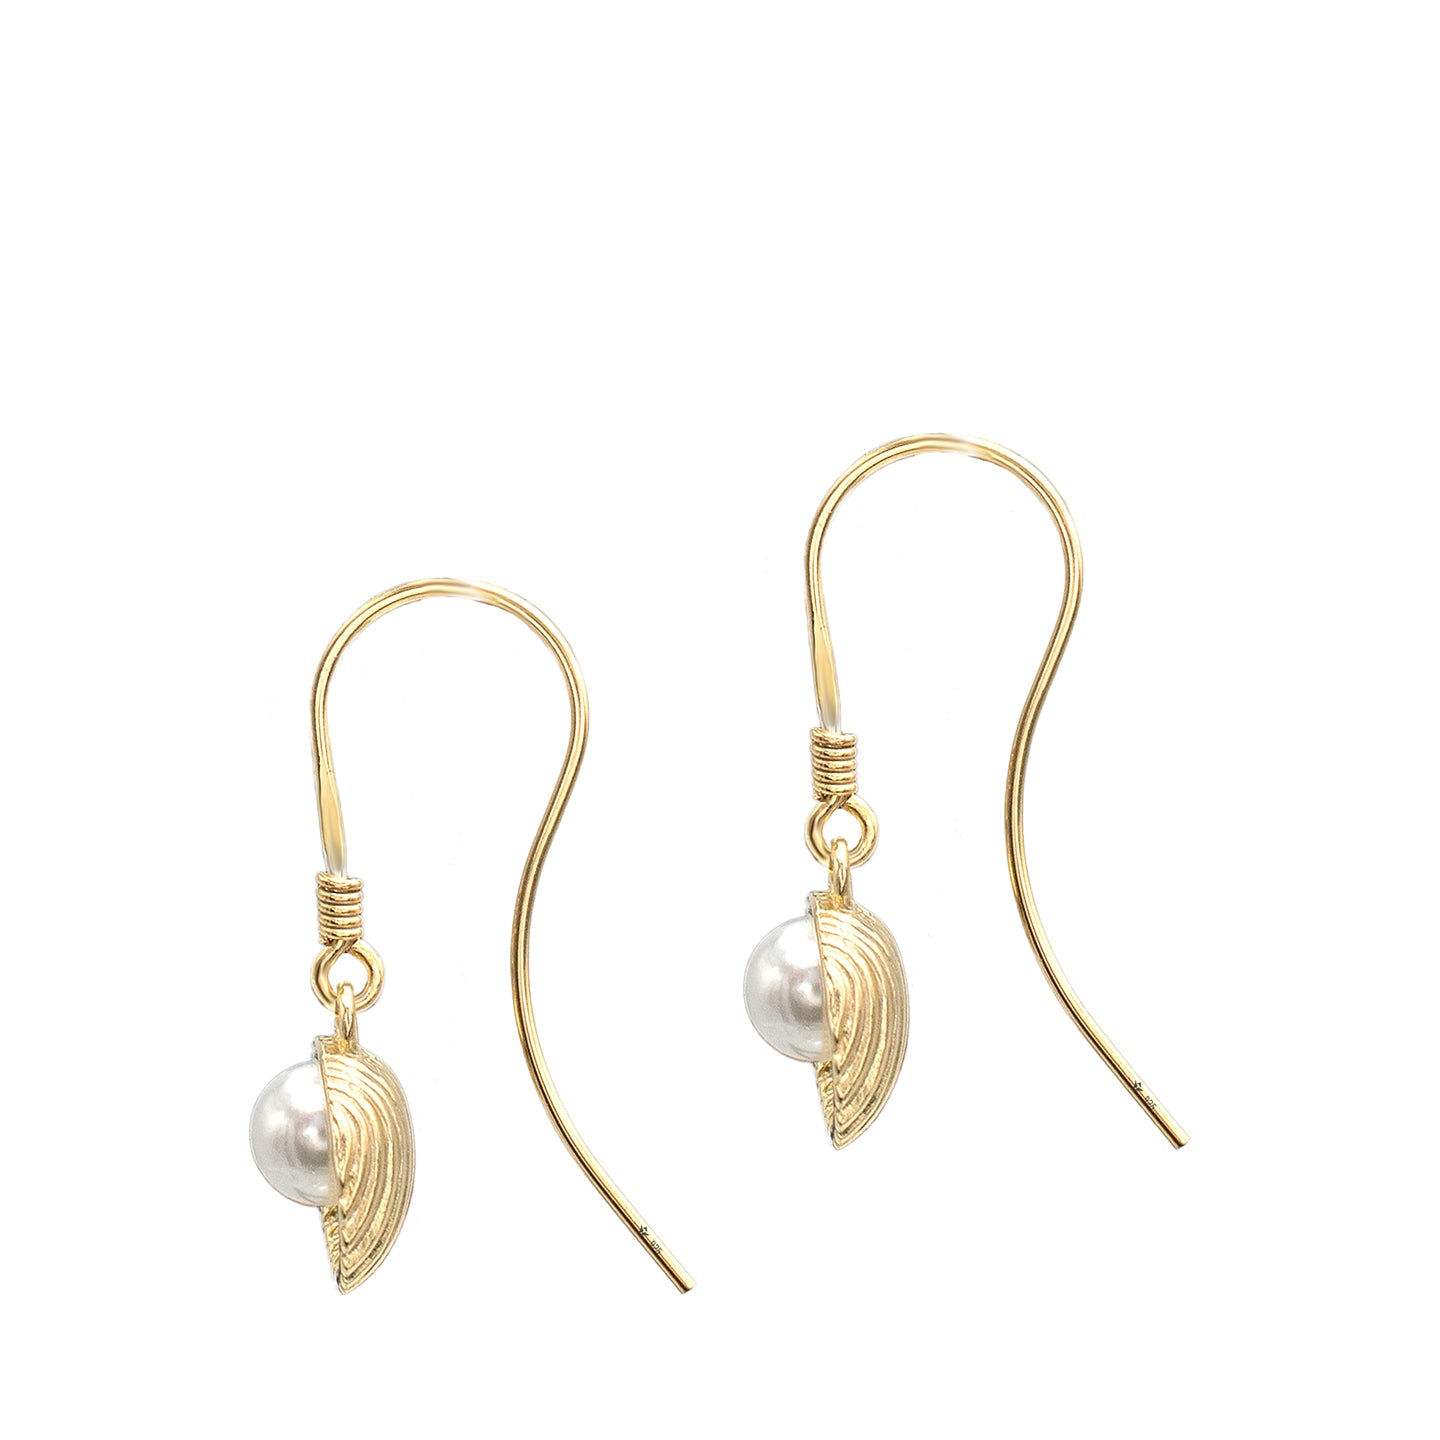 Cercei argint cu scoici si perle Seashell Story - placati aur galben 18K